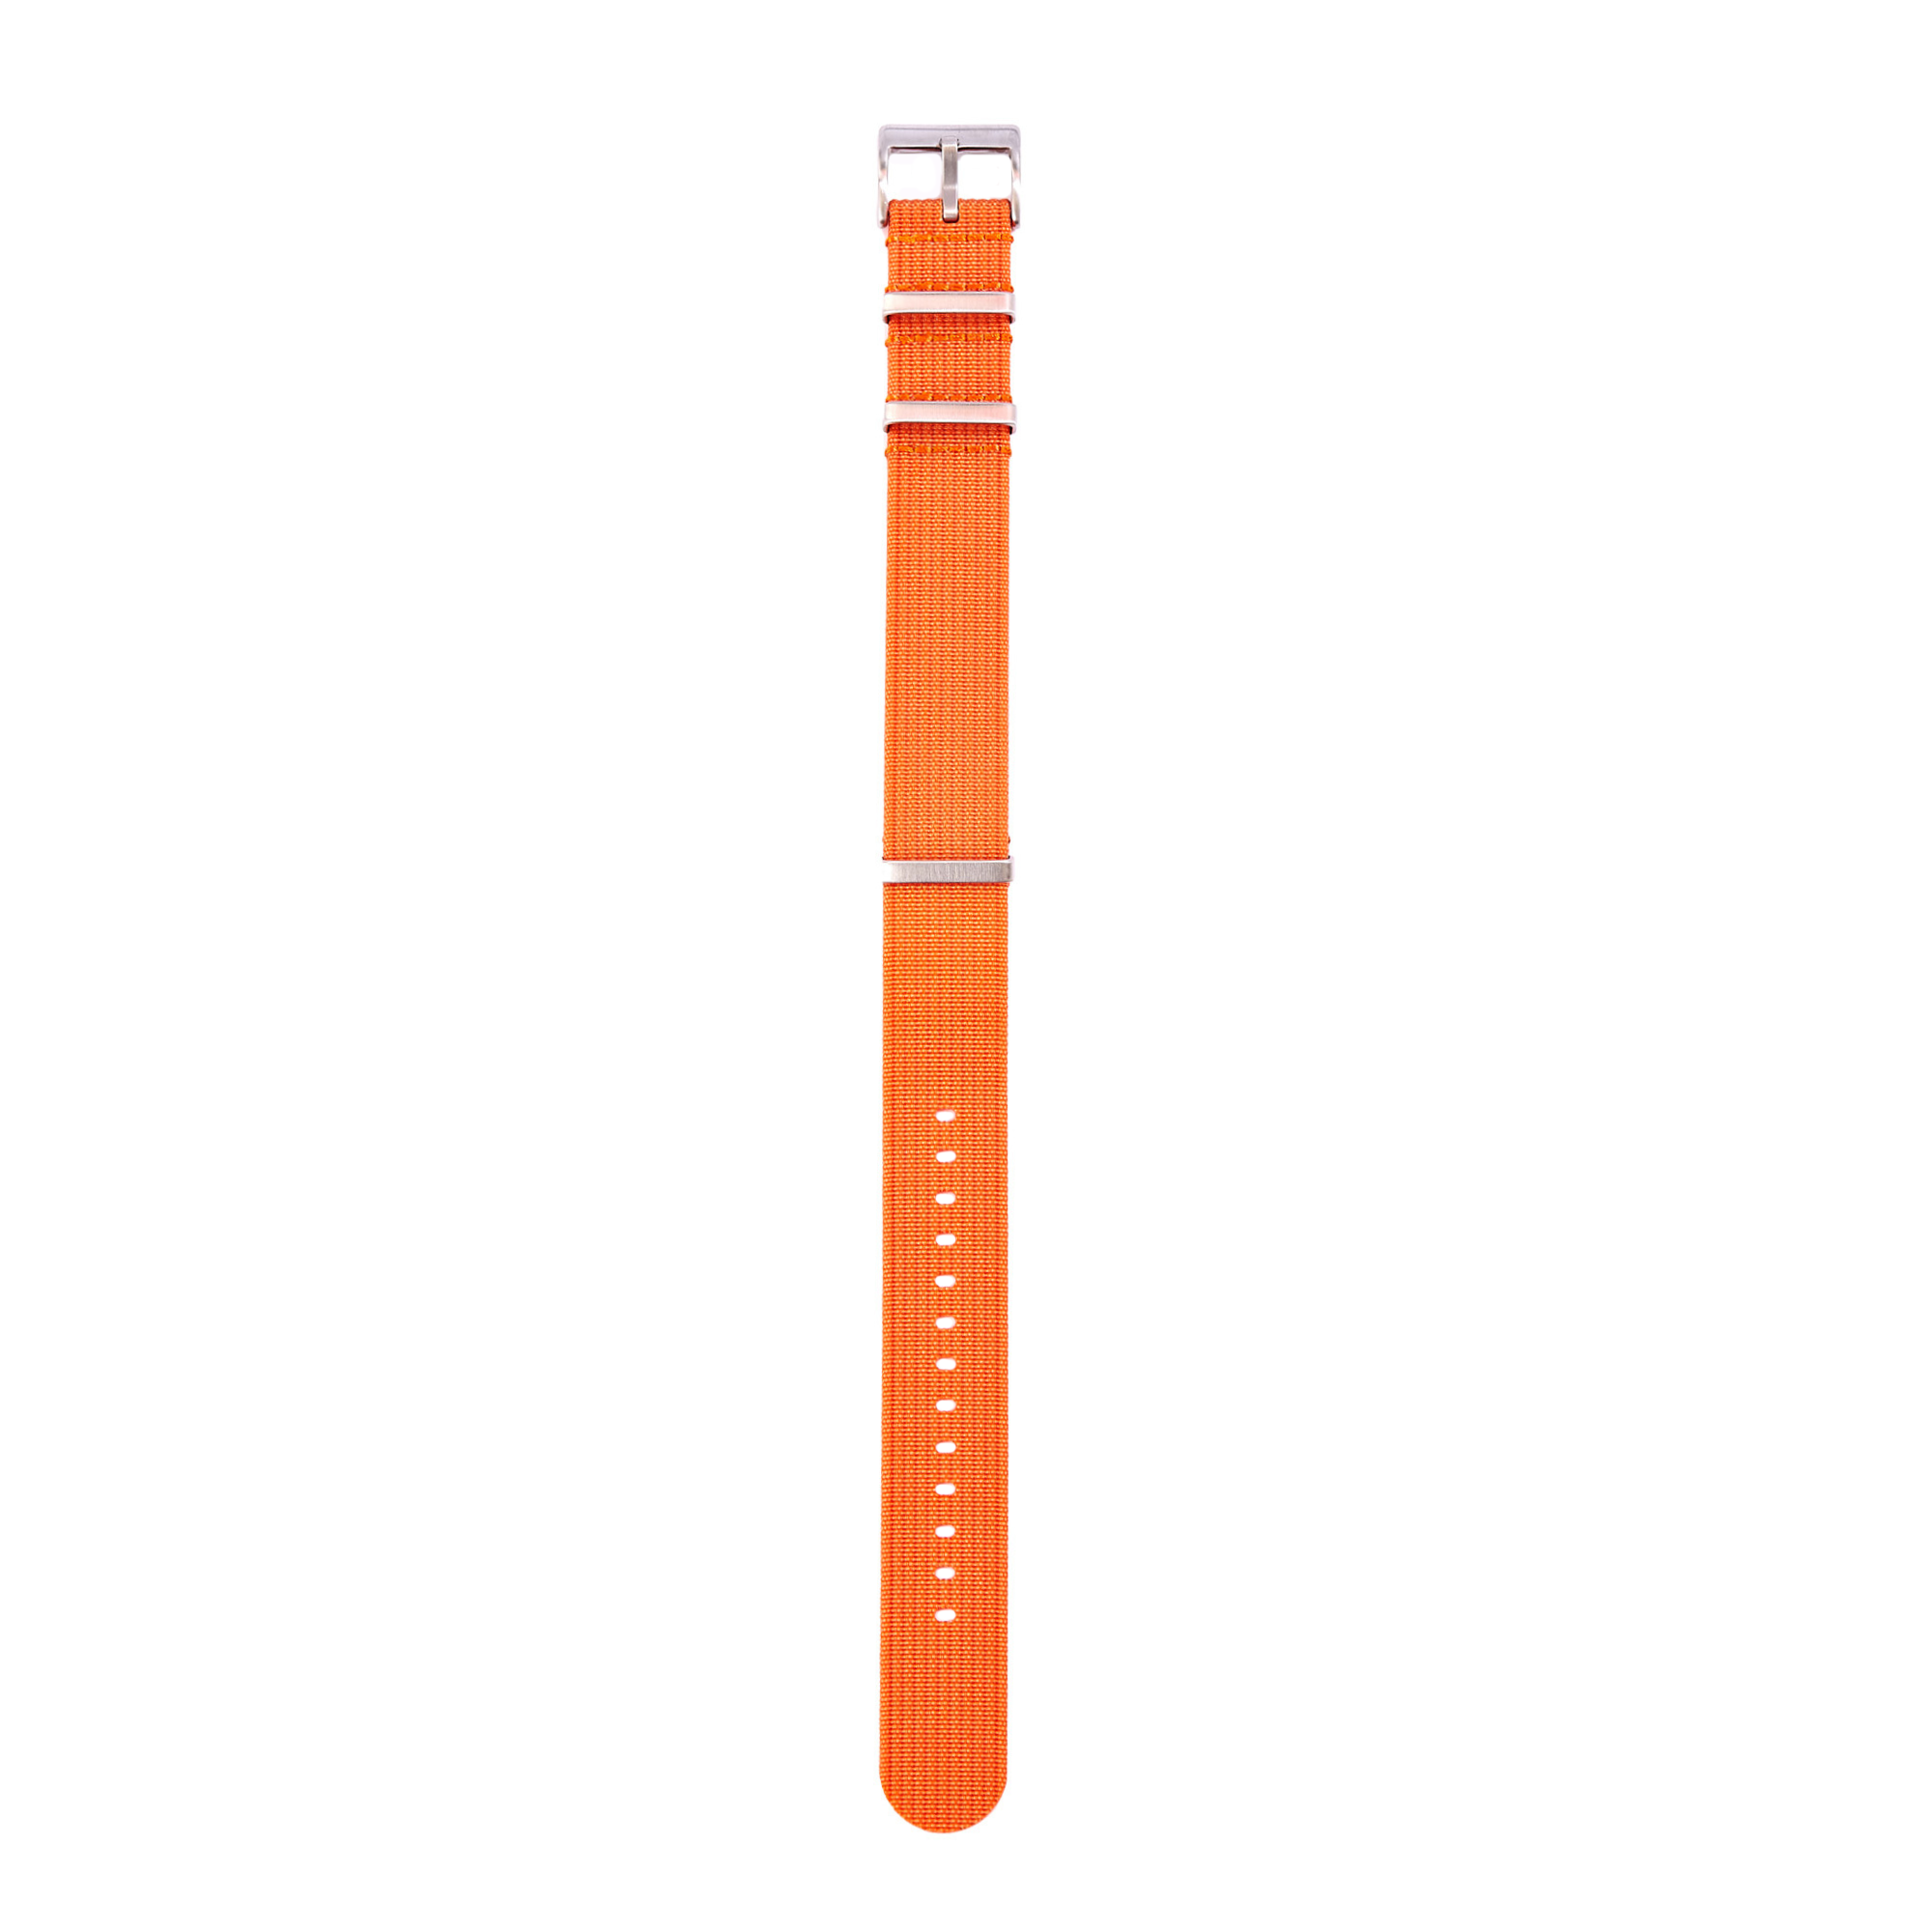 Ribbed Ballistic Nylon Strap - Orange